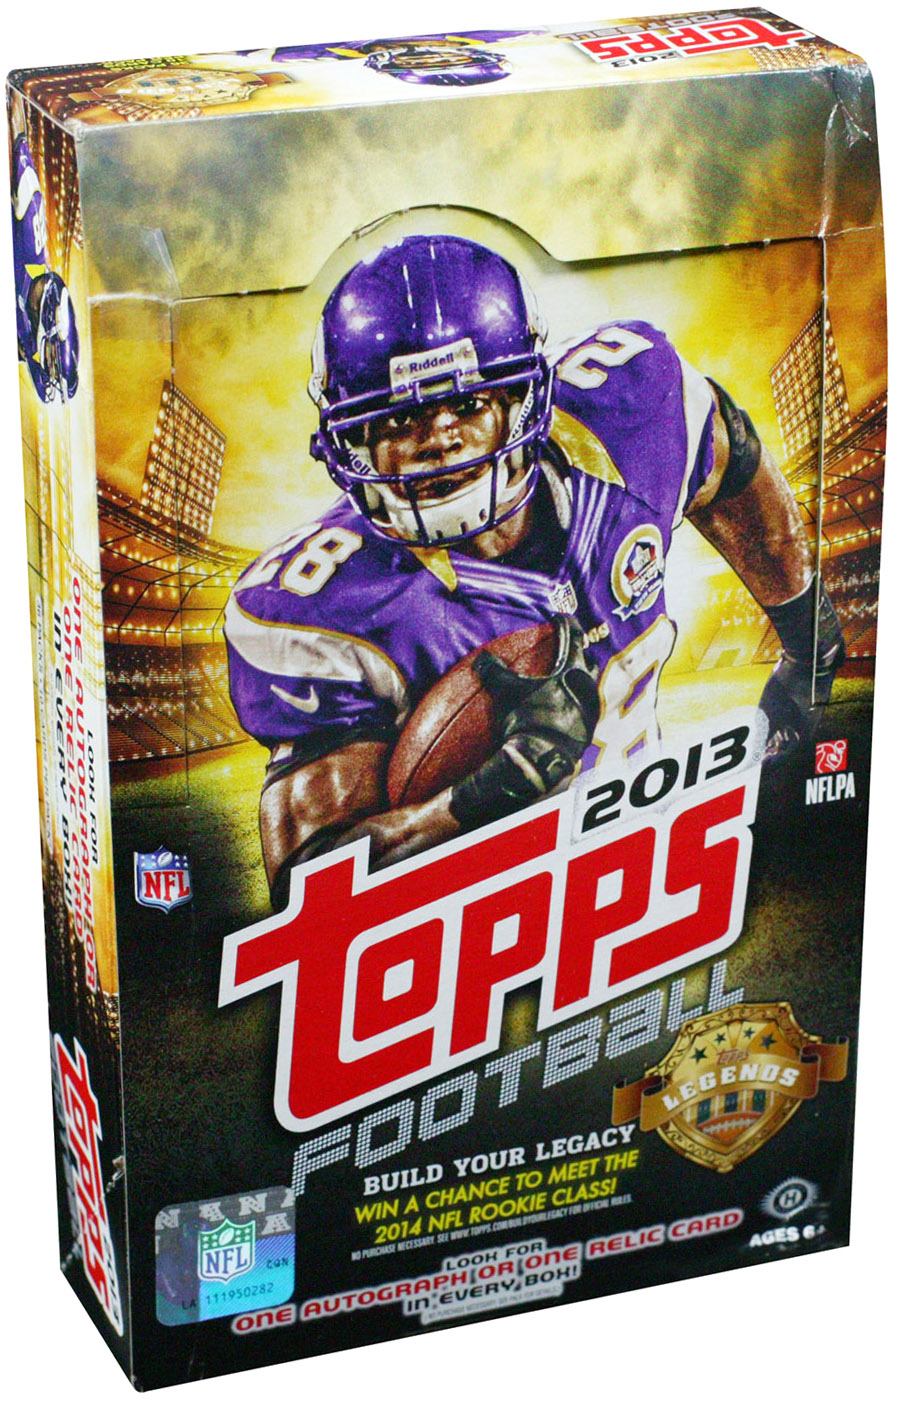 2013 Topps Football Hobby Box card image